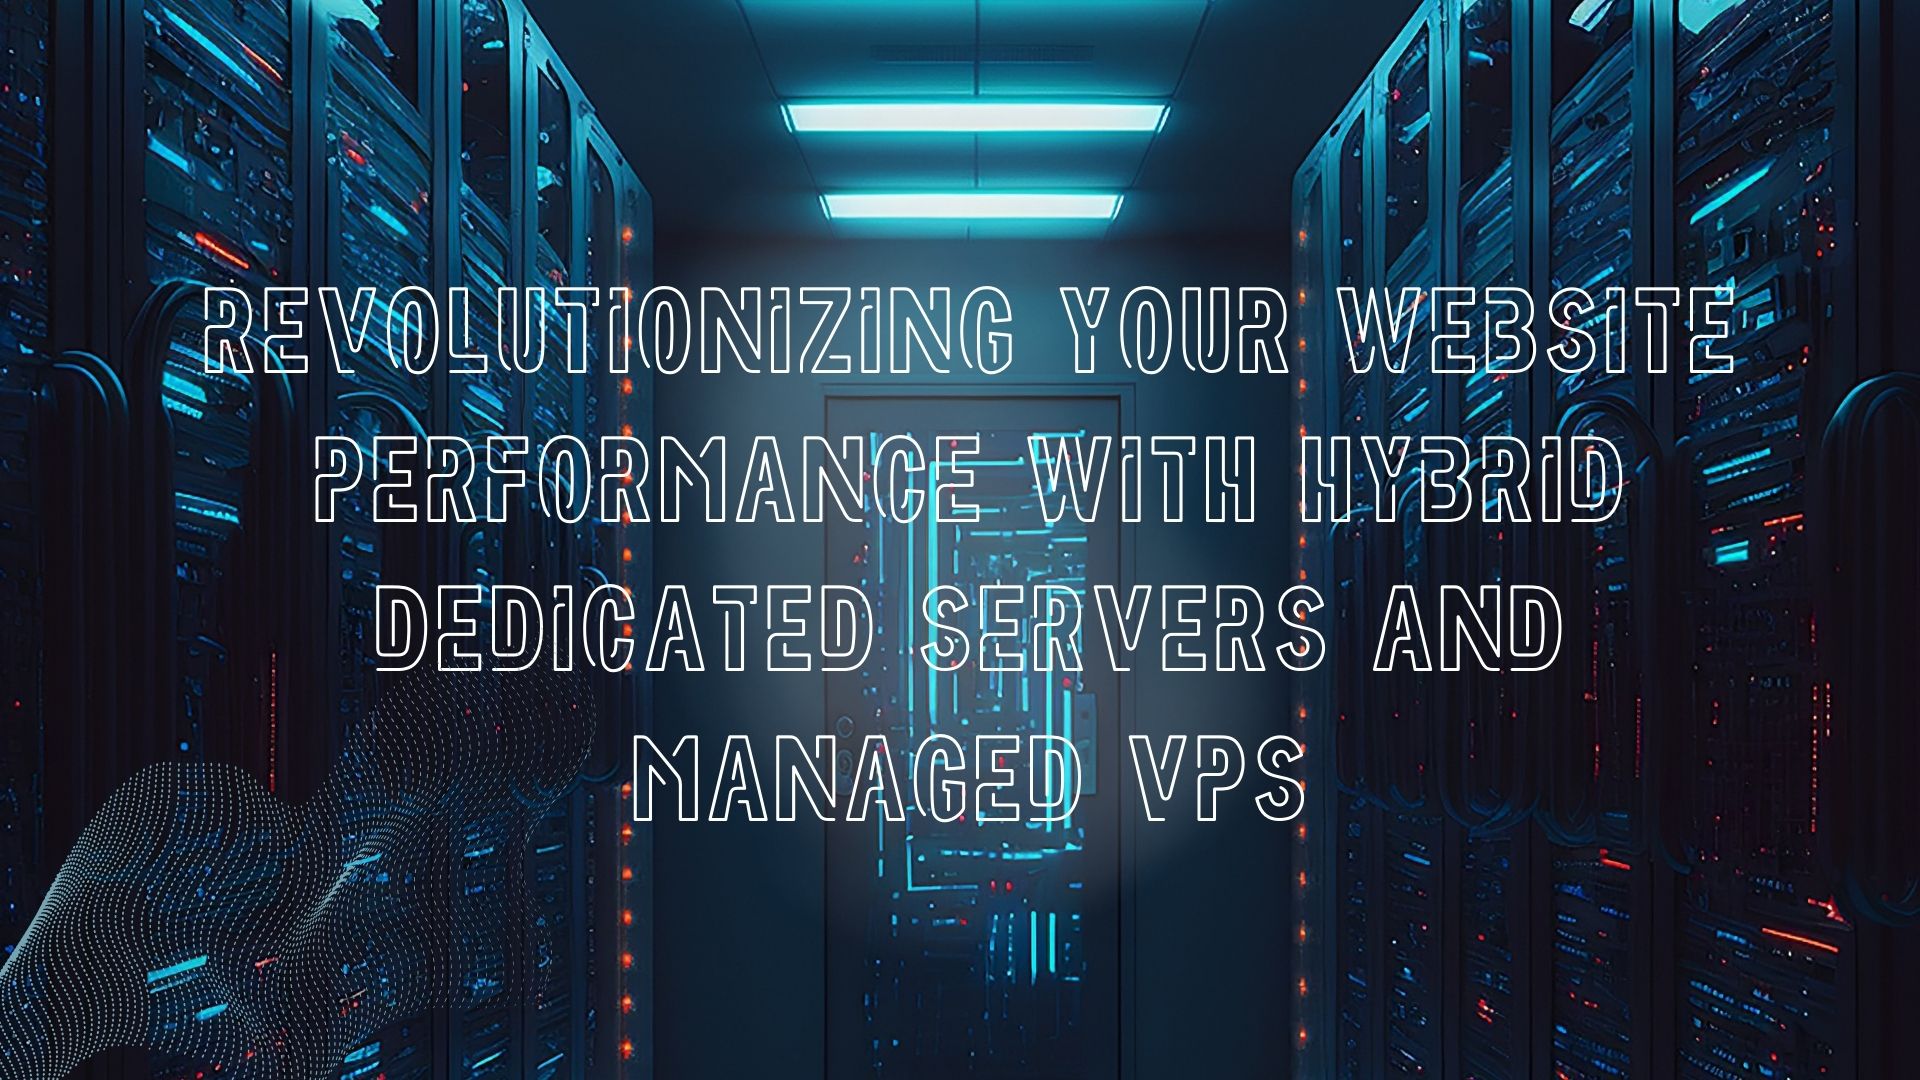 hybrid dedicated servers